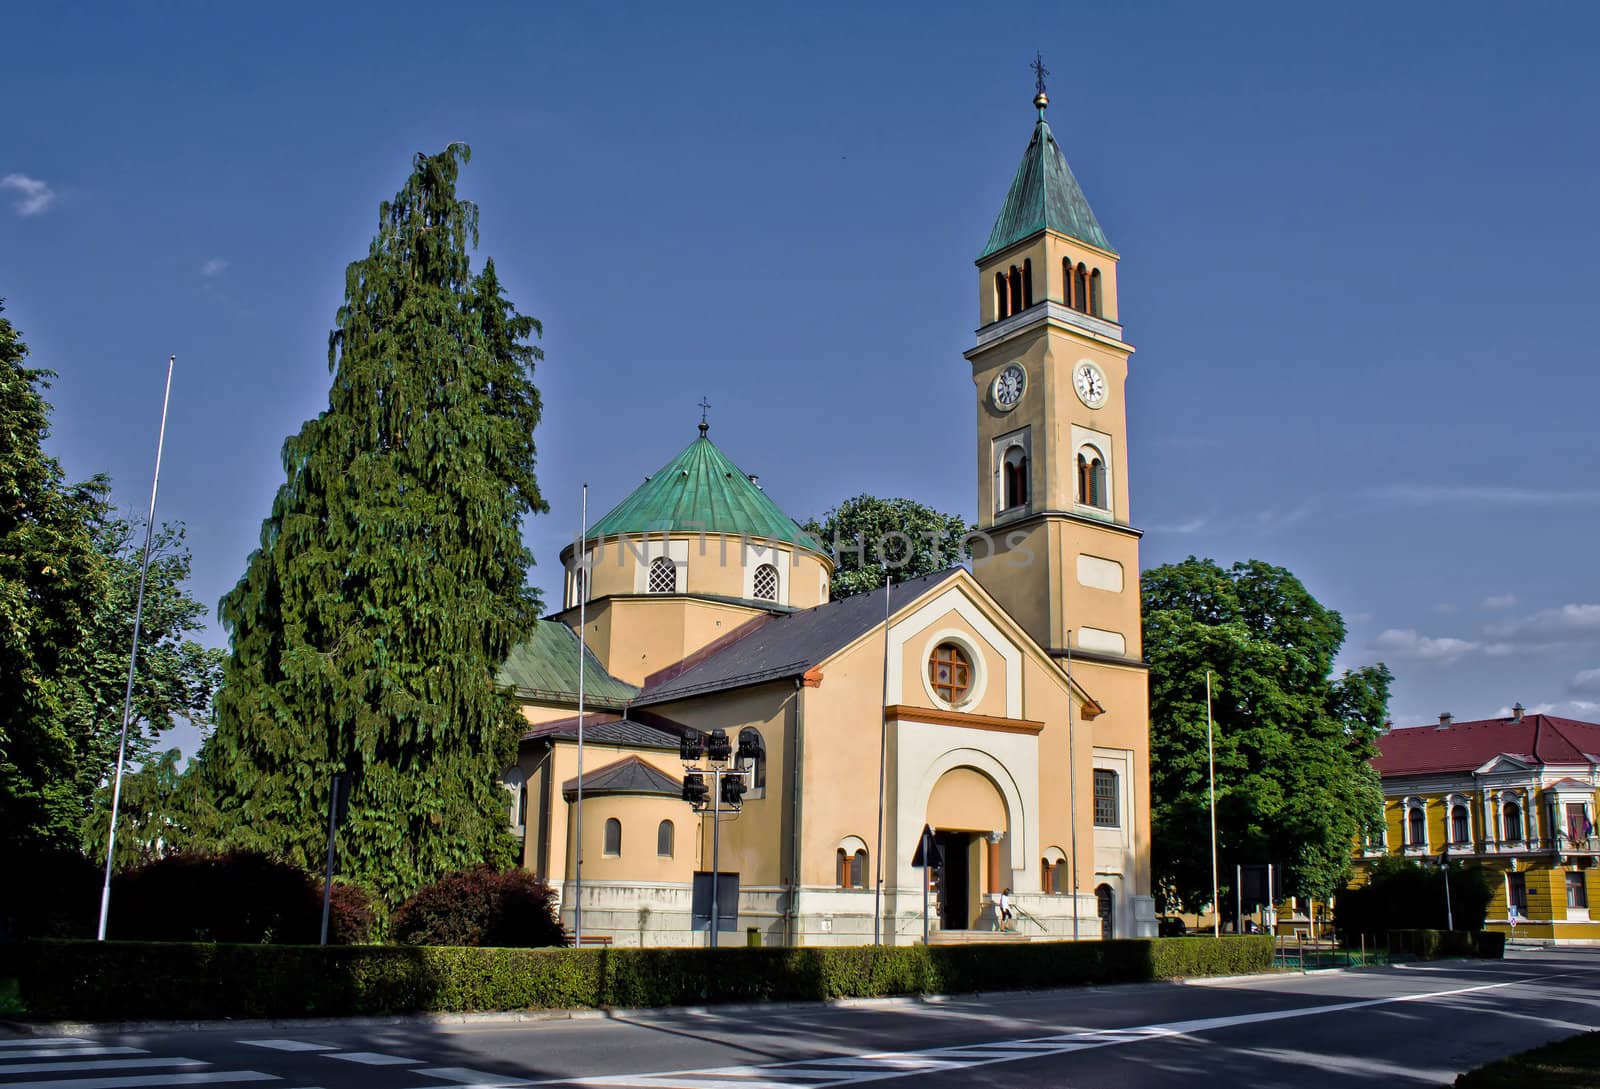 St. Juraj church in Durdevac, Podravina, Croatia by xbrchx